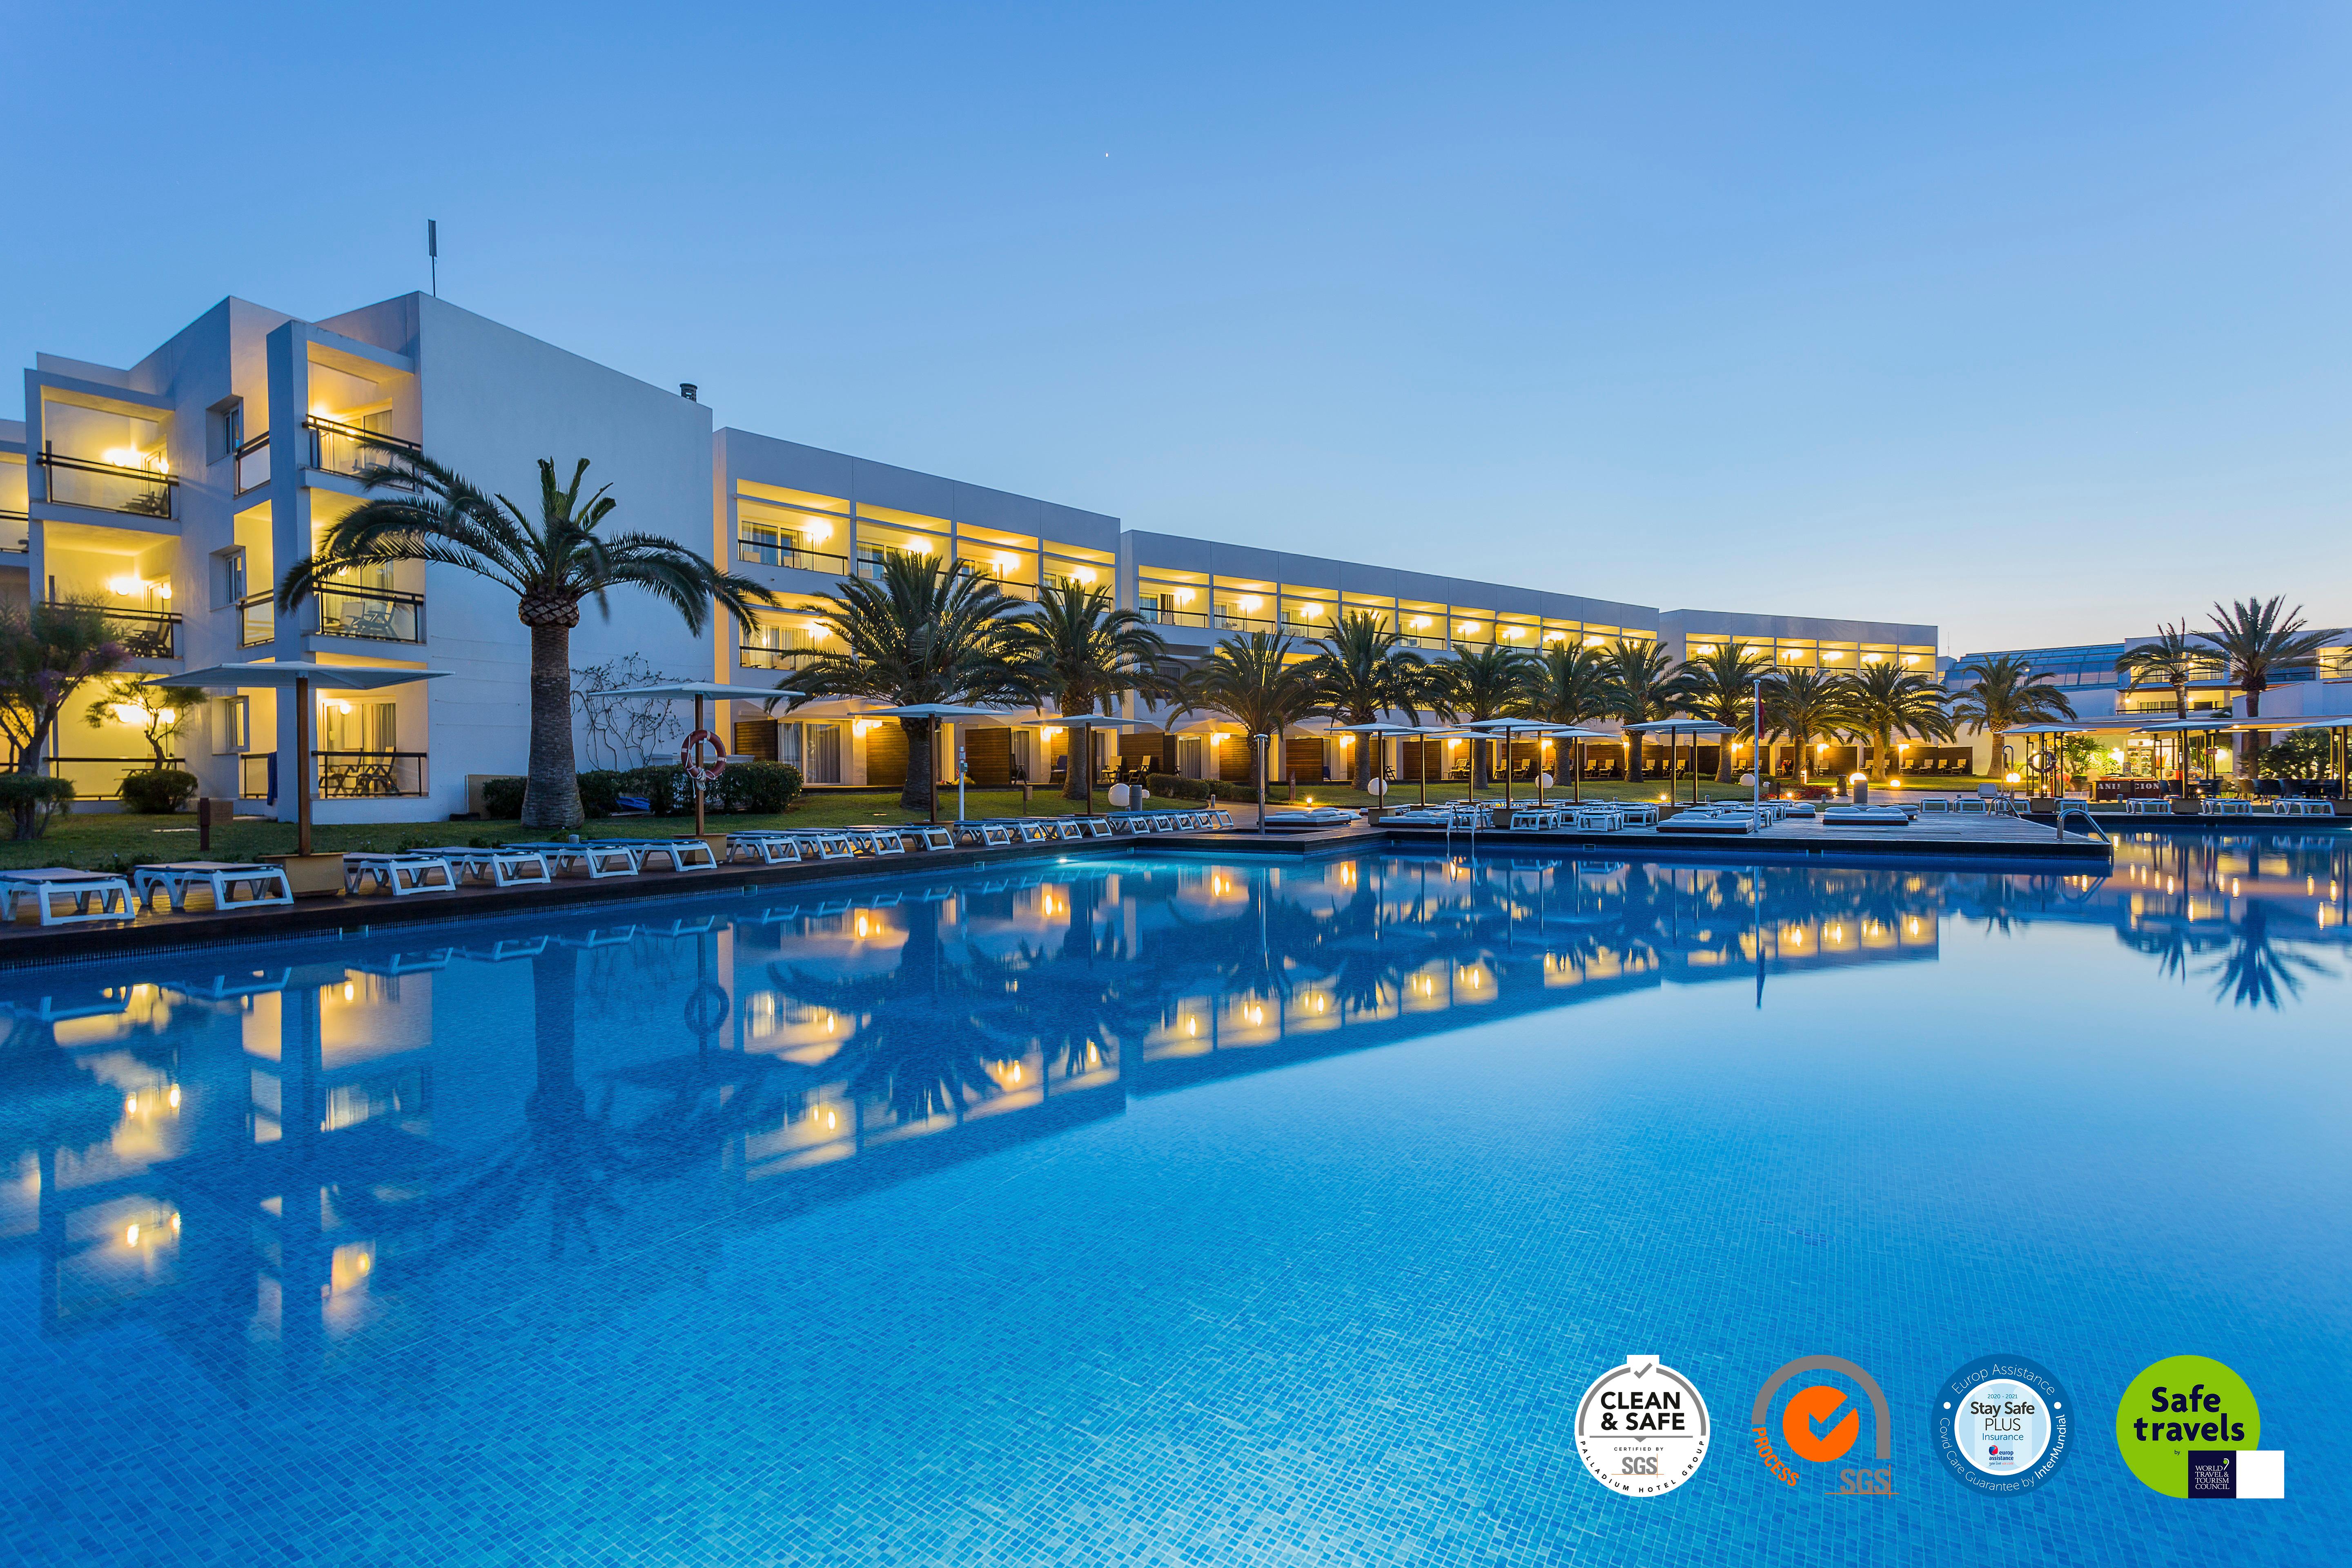 Grand Palladium Palace Ibiza Resort & Spa in Playa d'en Bossa, Ibiza